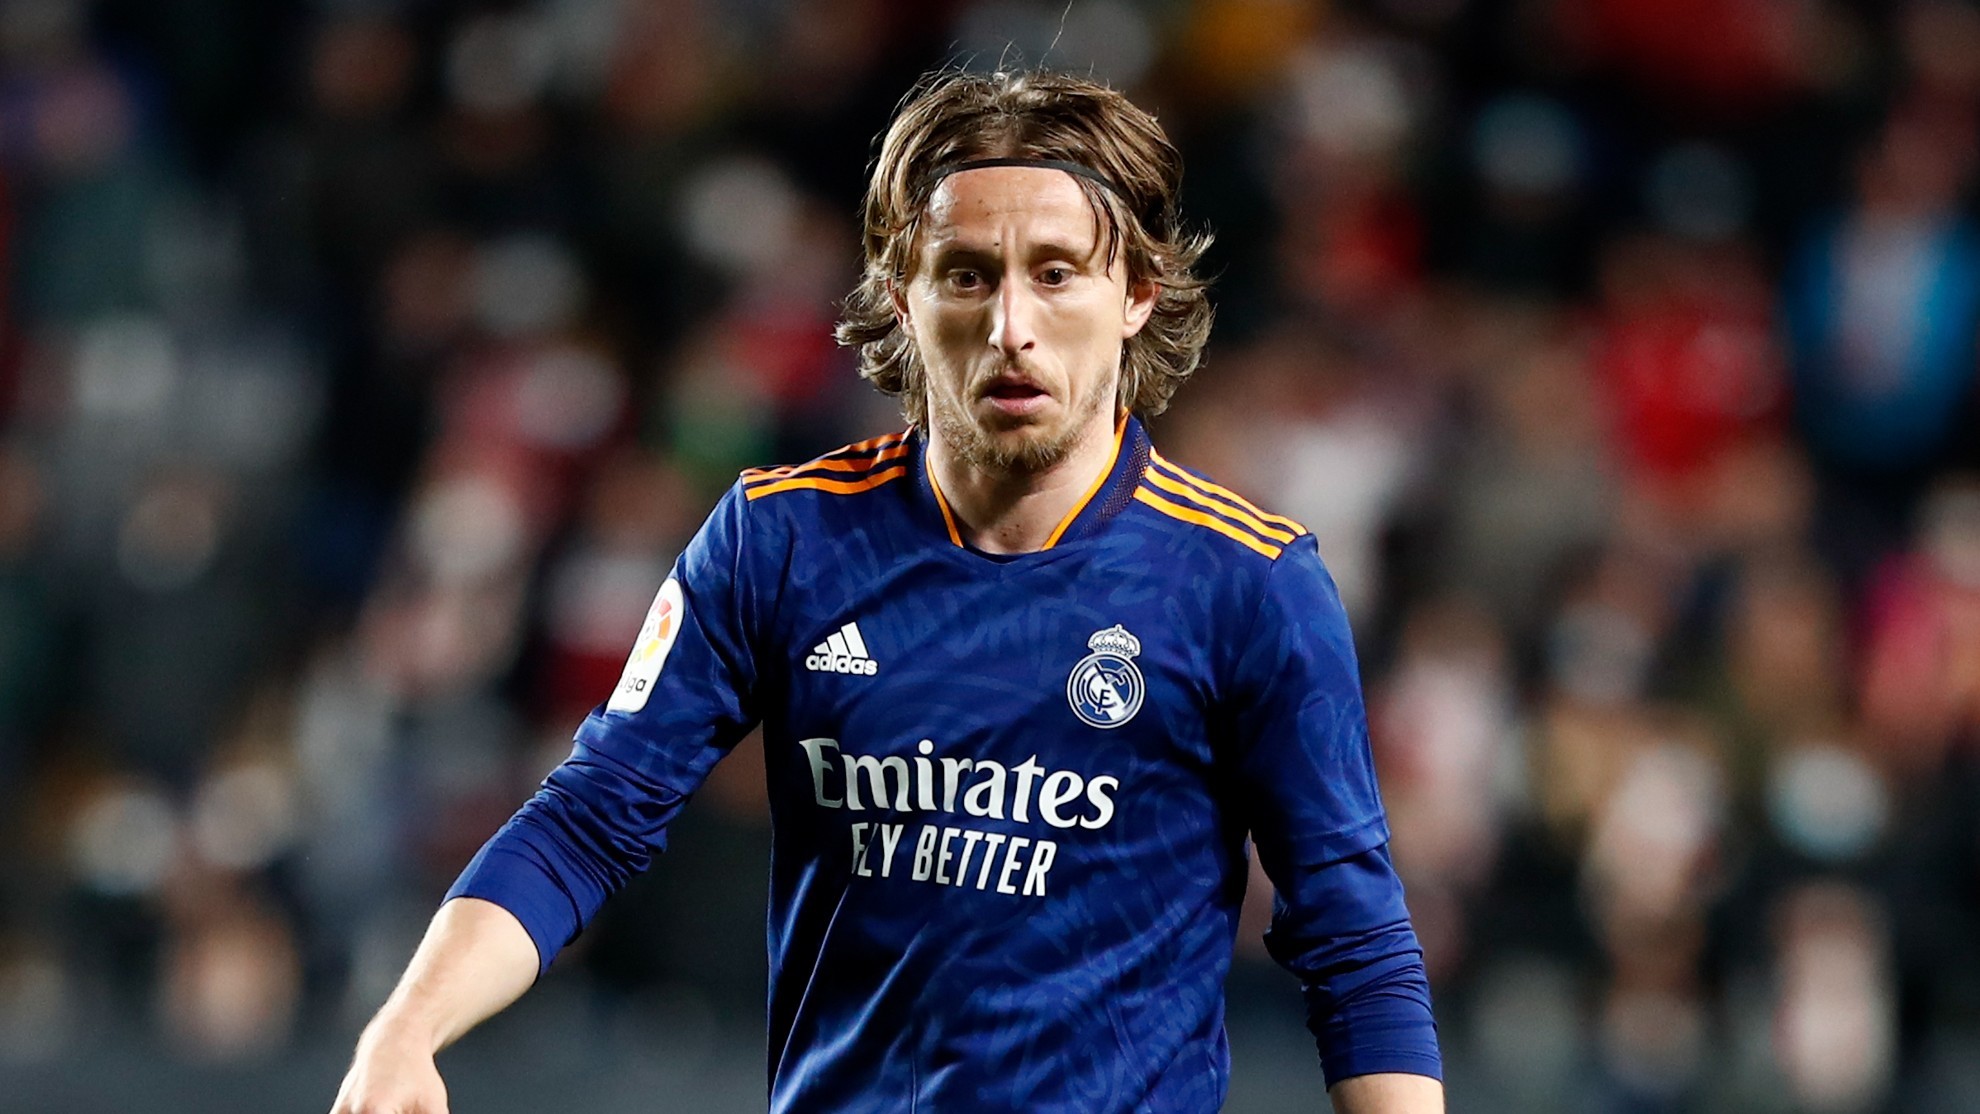 Alarm bells at Real Madrid: Modric returns injured